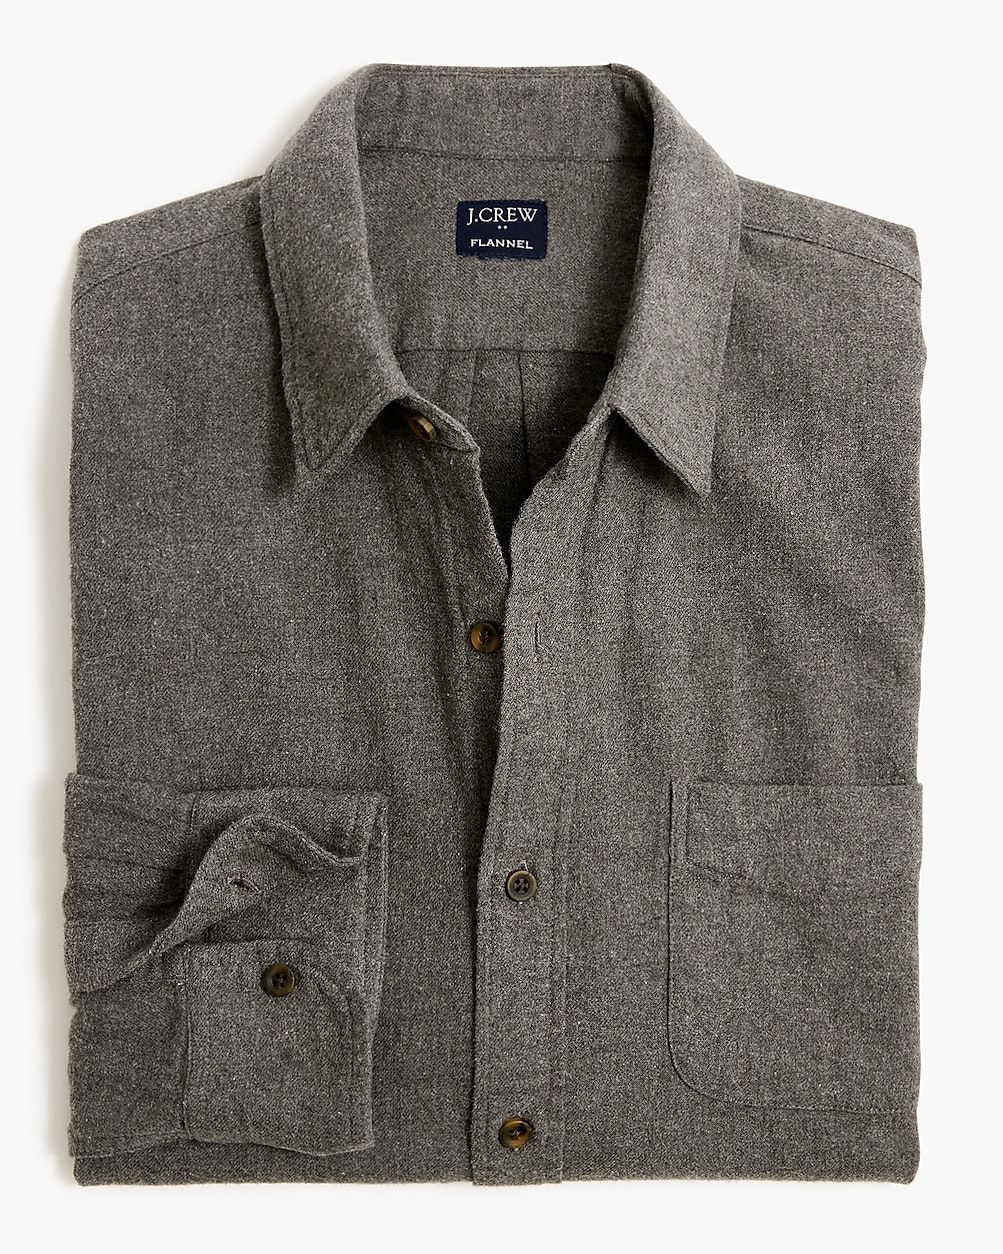 Classic flannel shirt | J.Crew Factory